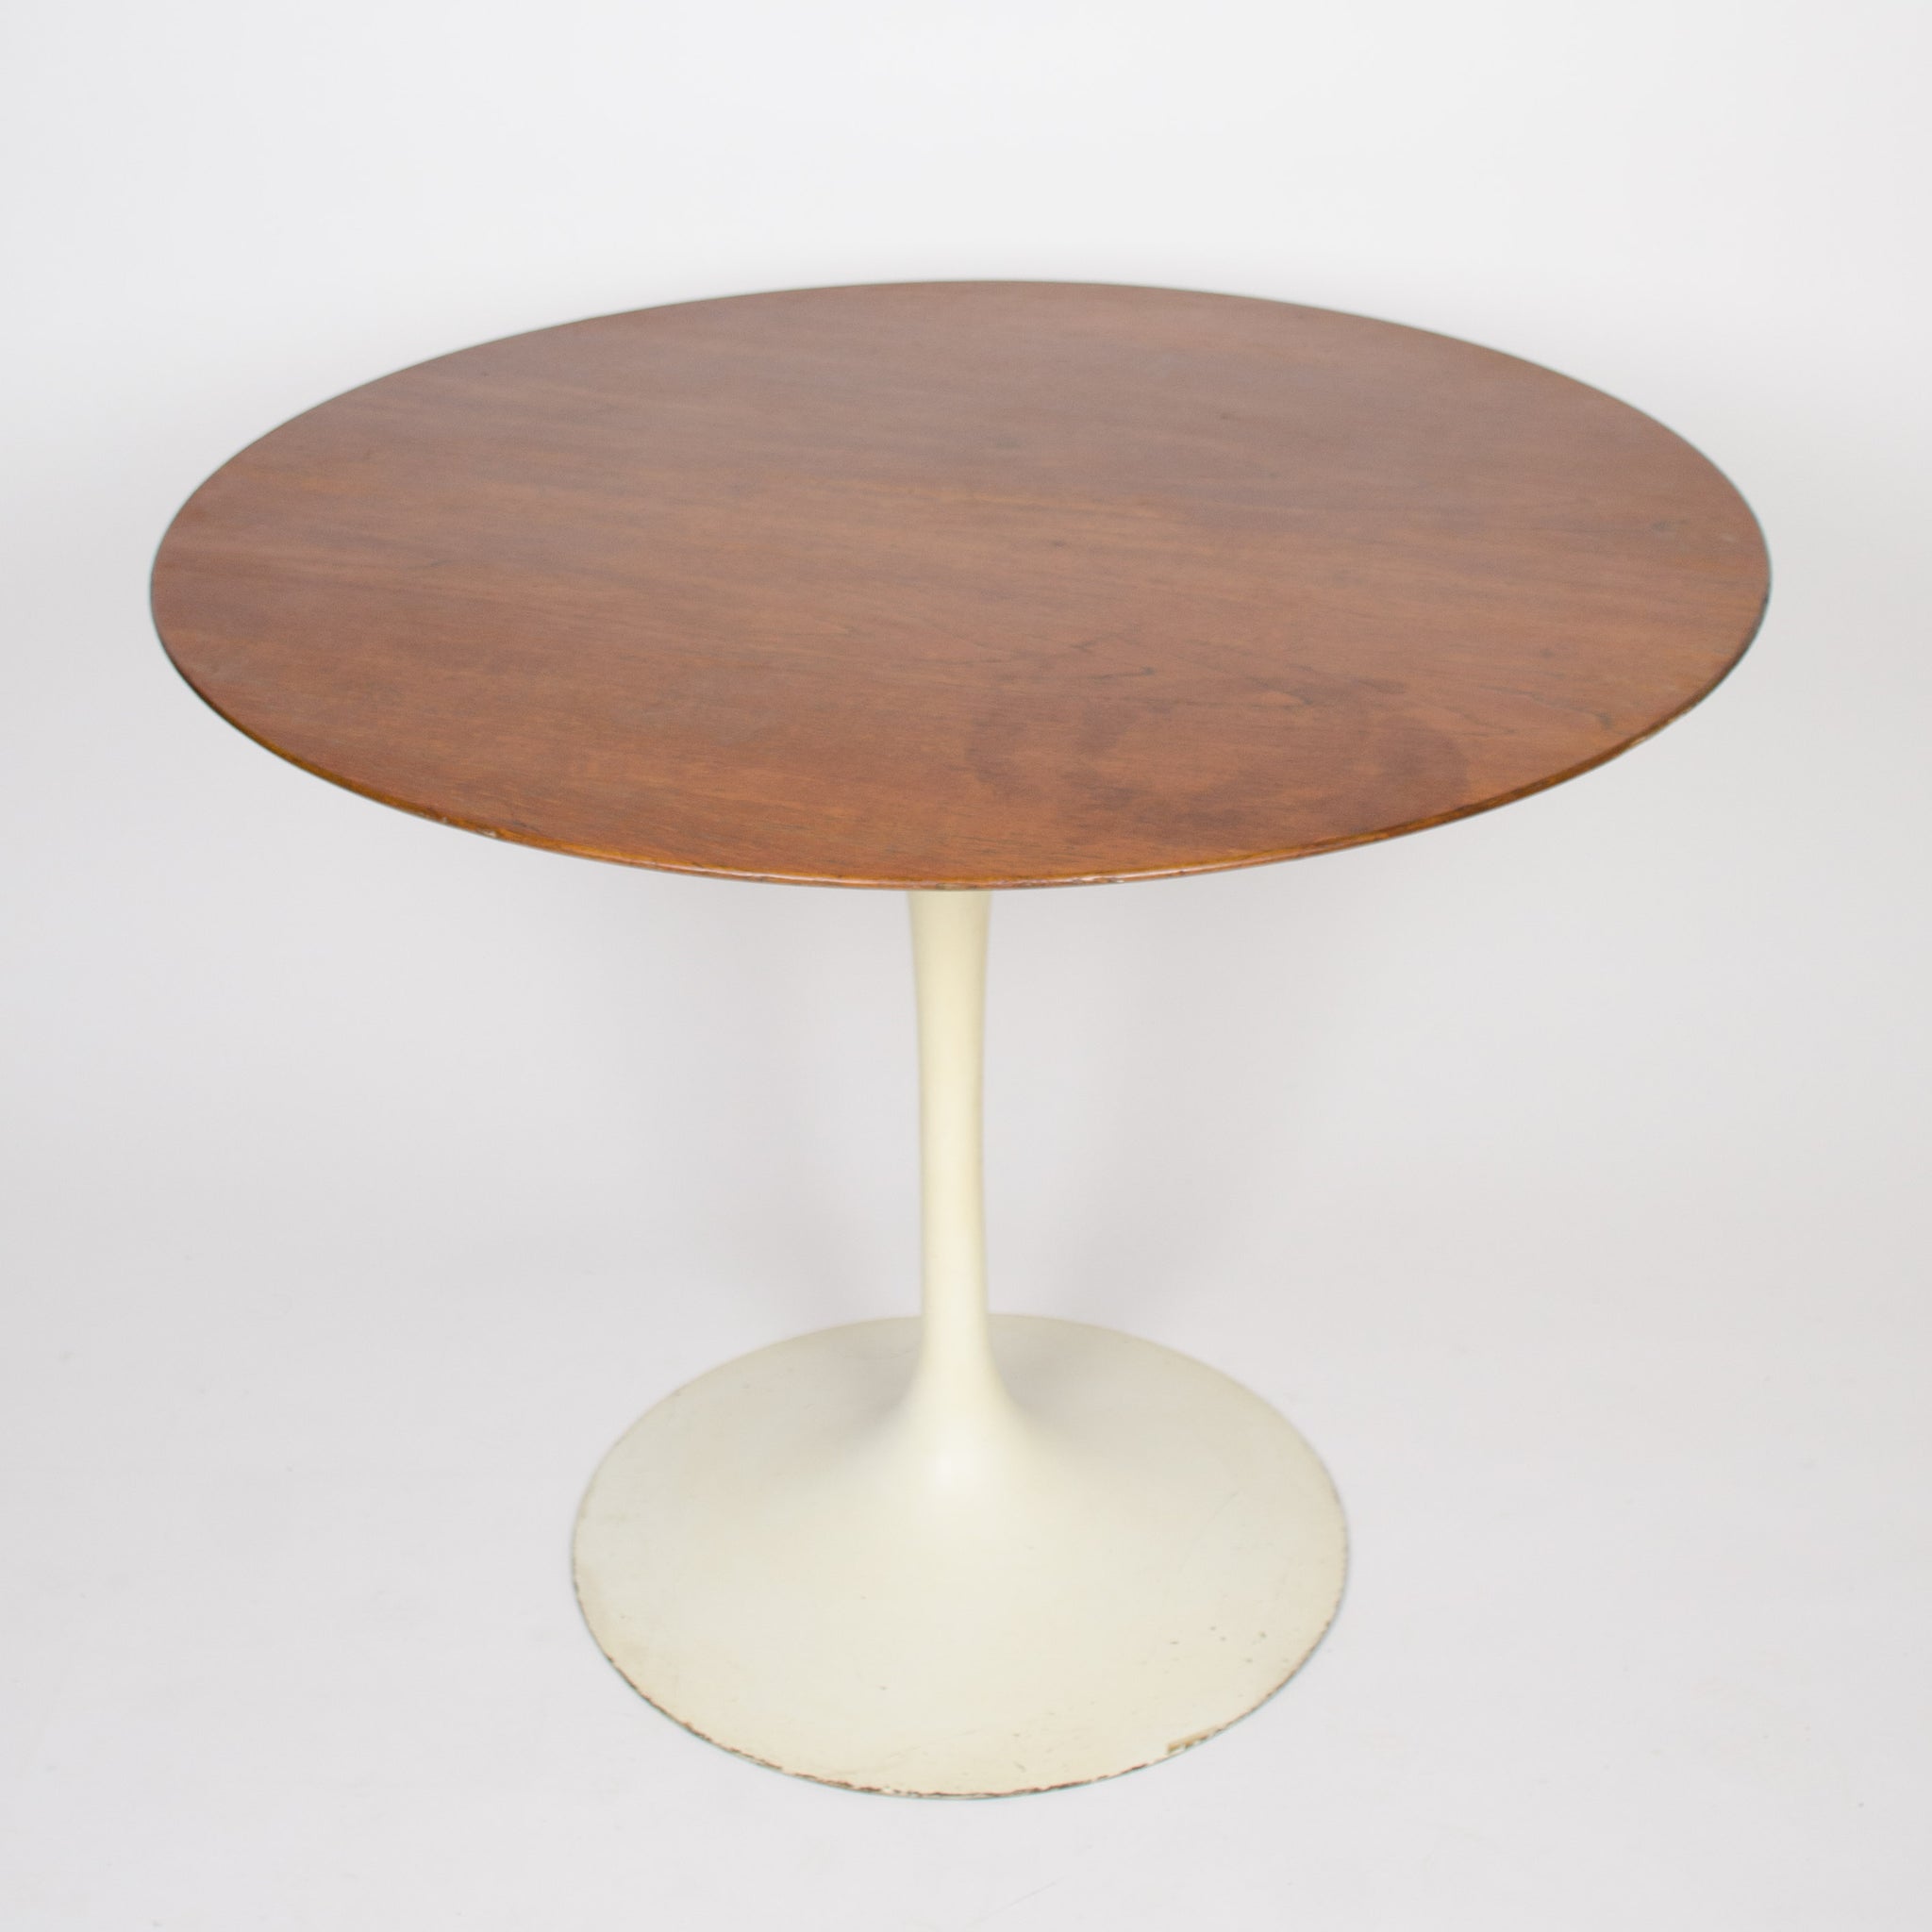 SOLD 1960's Eero Saarinen For Knoll 36 Inch Walnut Tulip Cafe / Dining Table Marked